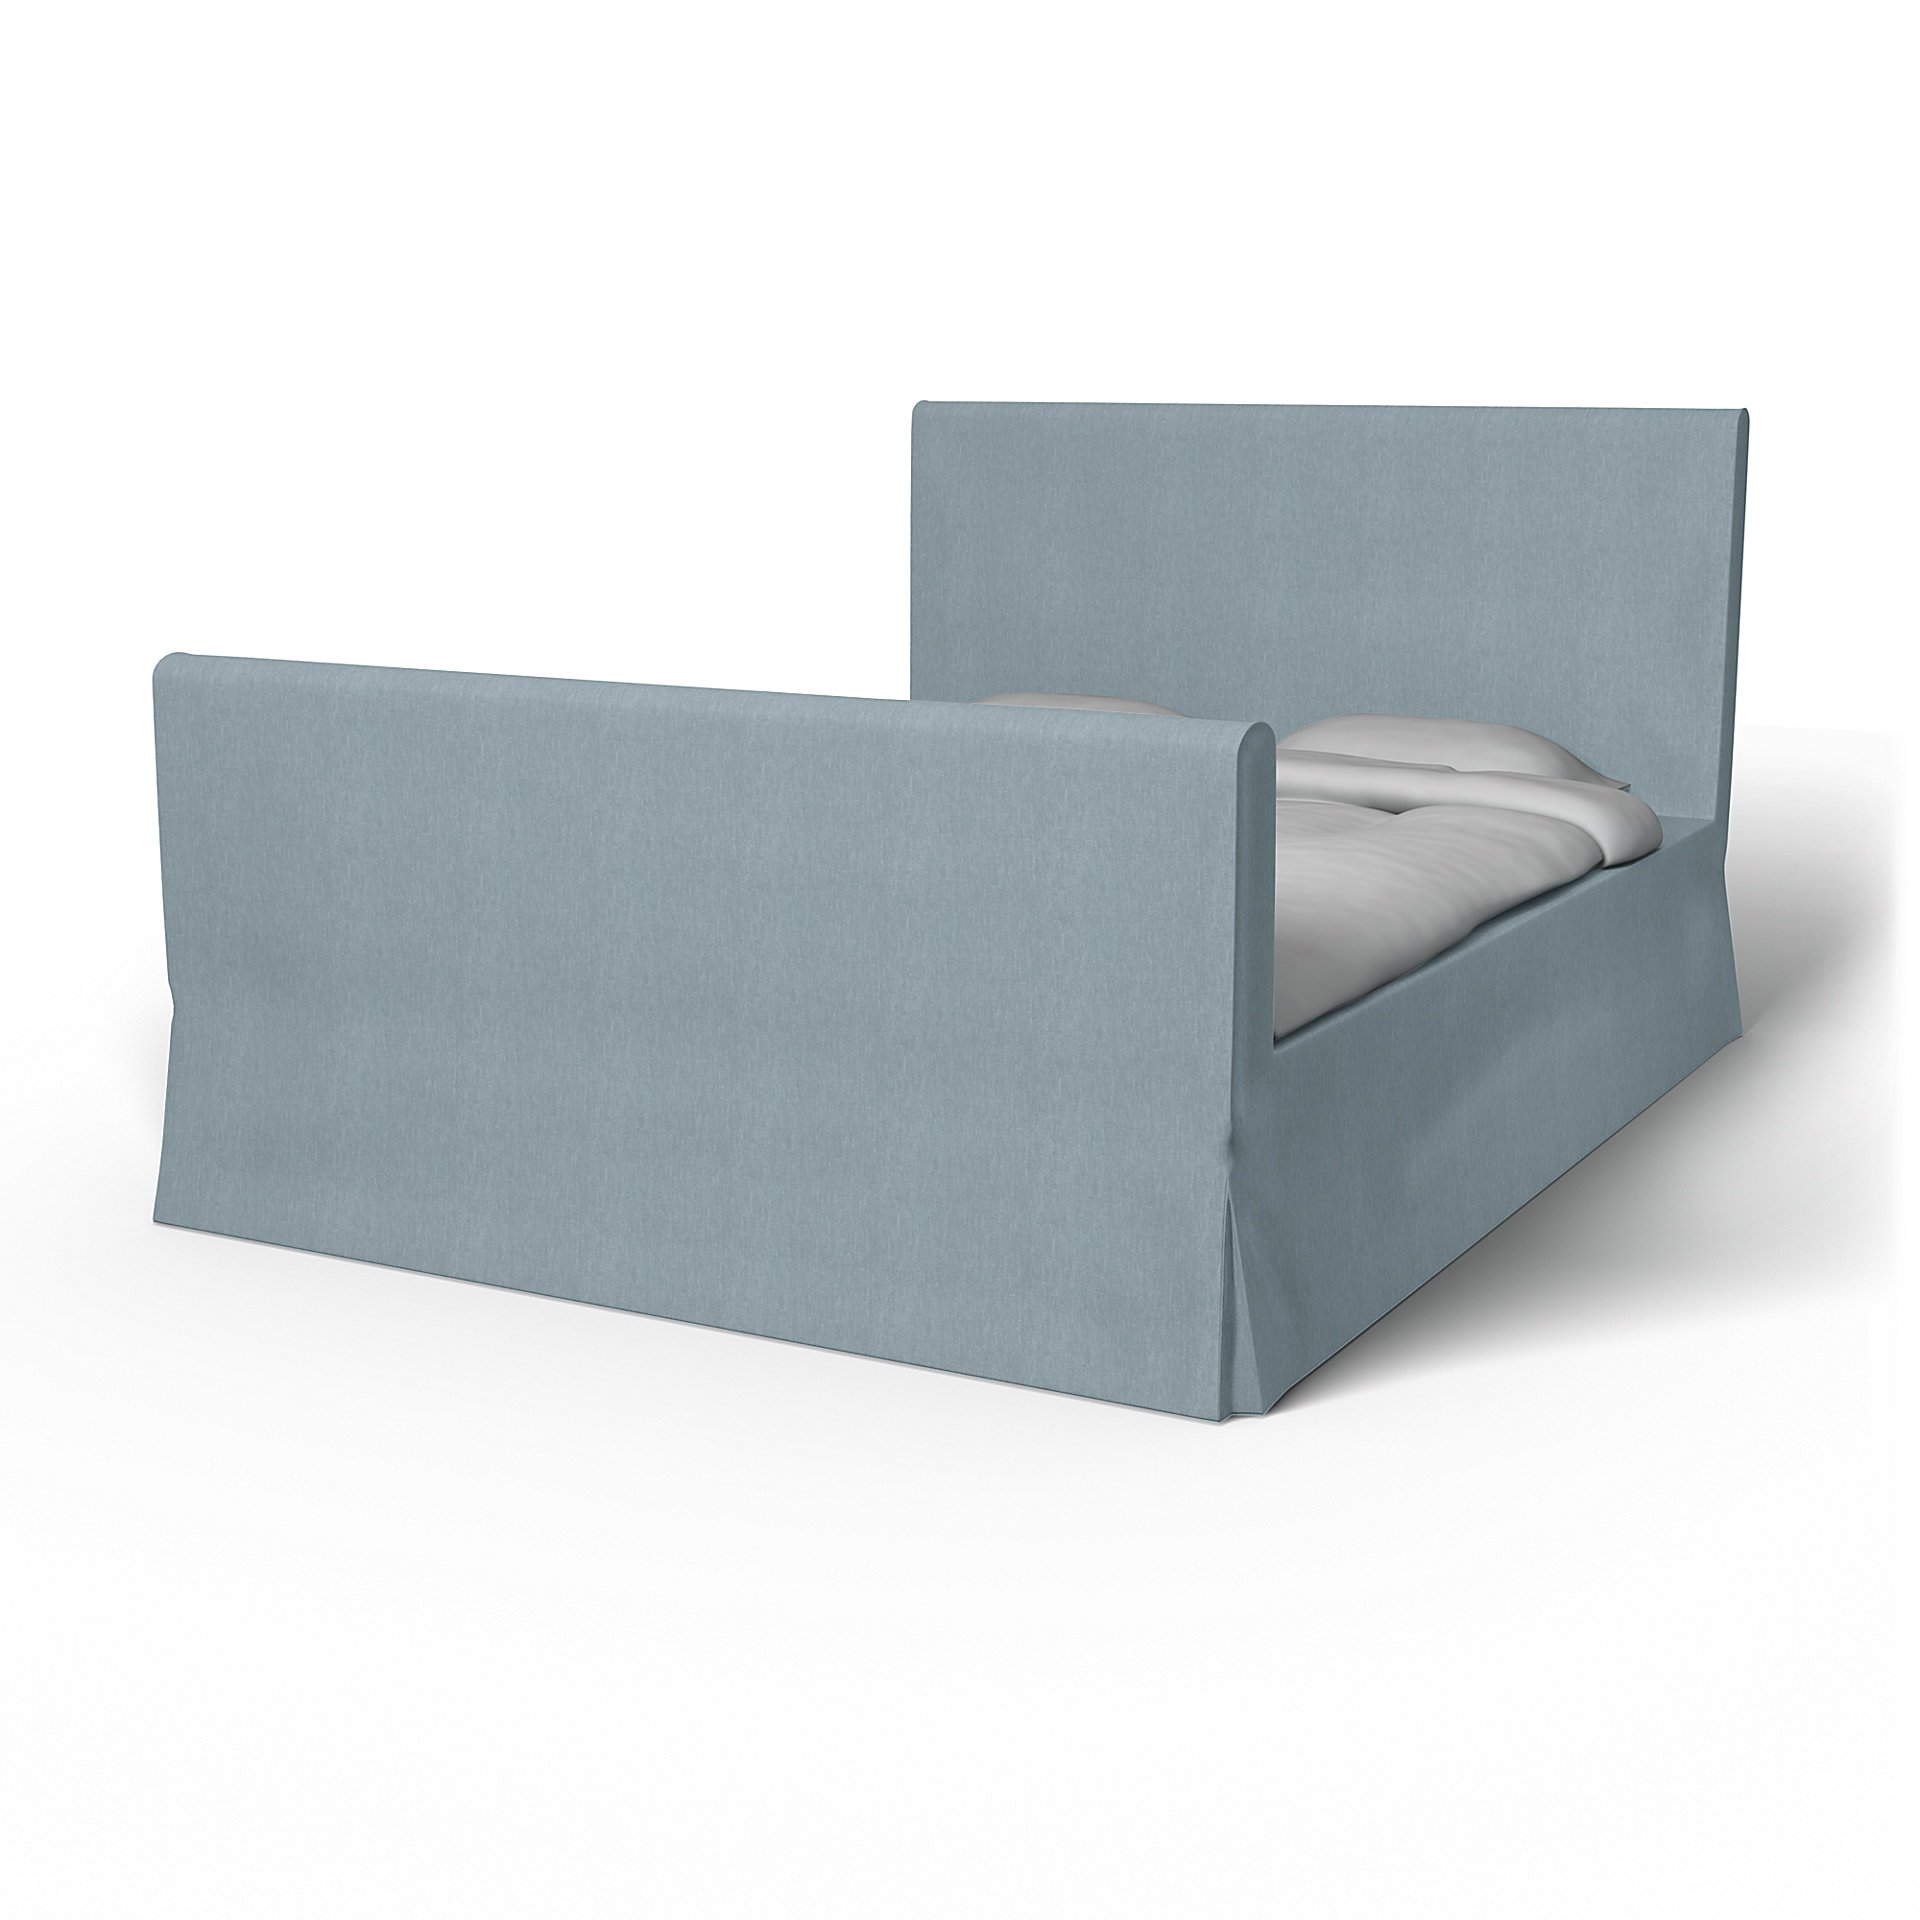 IKEA - Floro Bed Frame Cover, Dusty Blue, Linen - Bemz